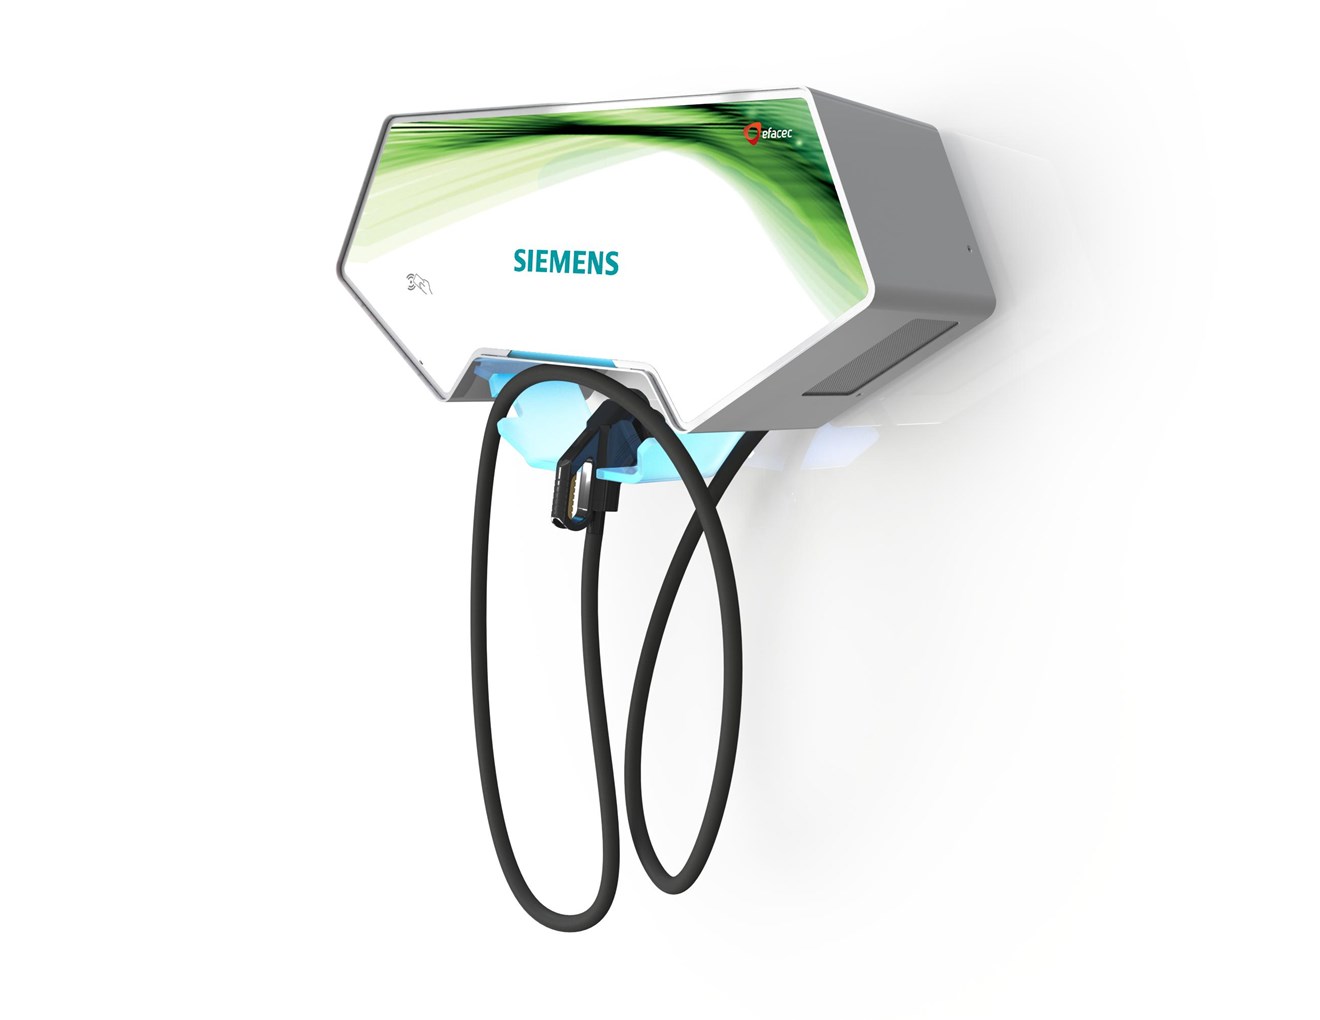 Siemens unveils new electric vehicle charging solutions: qc24s-siemens-full.jpg